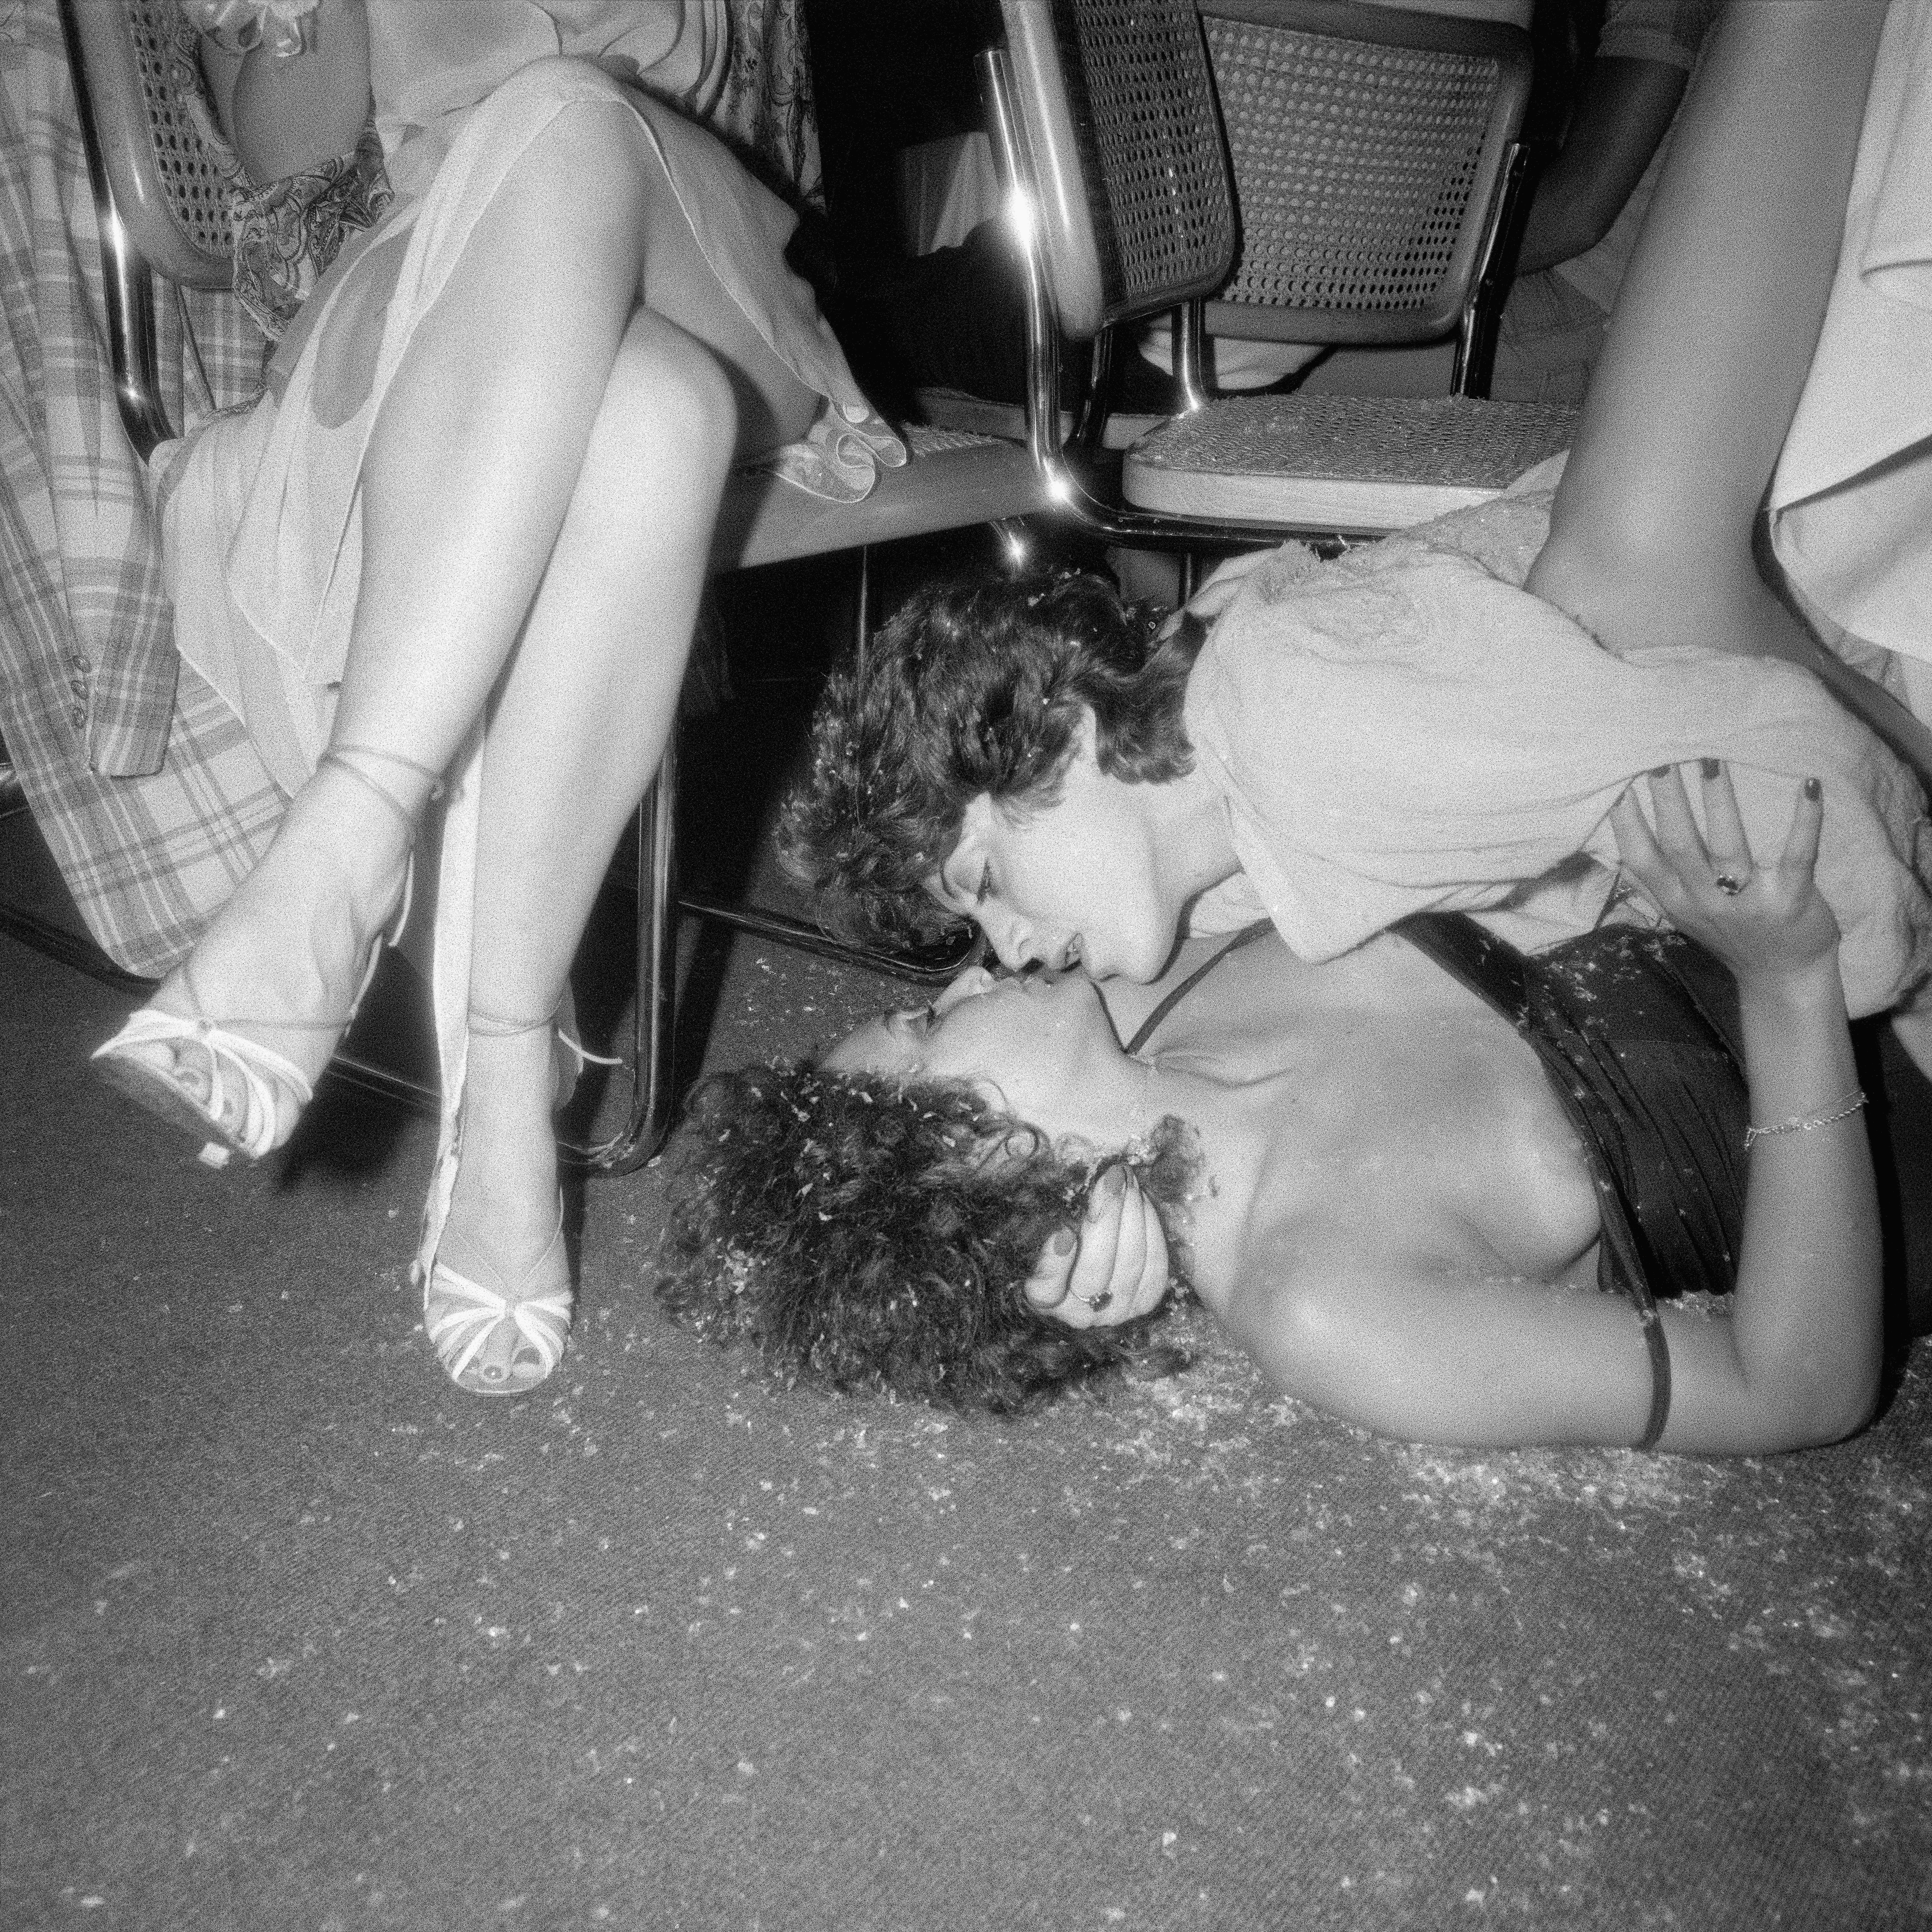 QuirkyVision 45RPM - Women Embrace on Floor Near JudiJupiter’s Legs